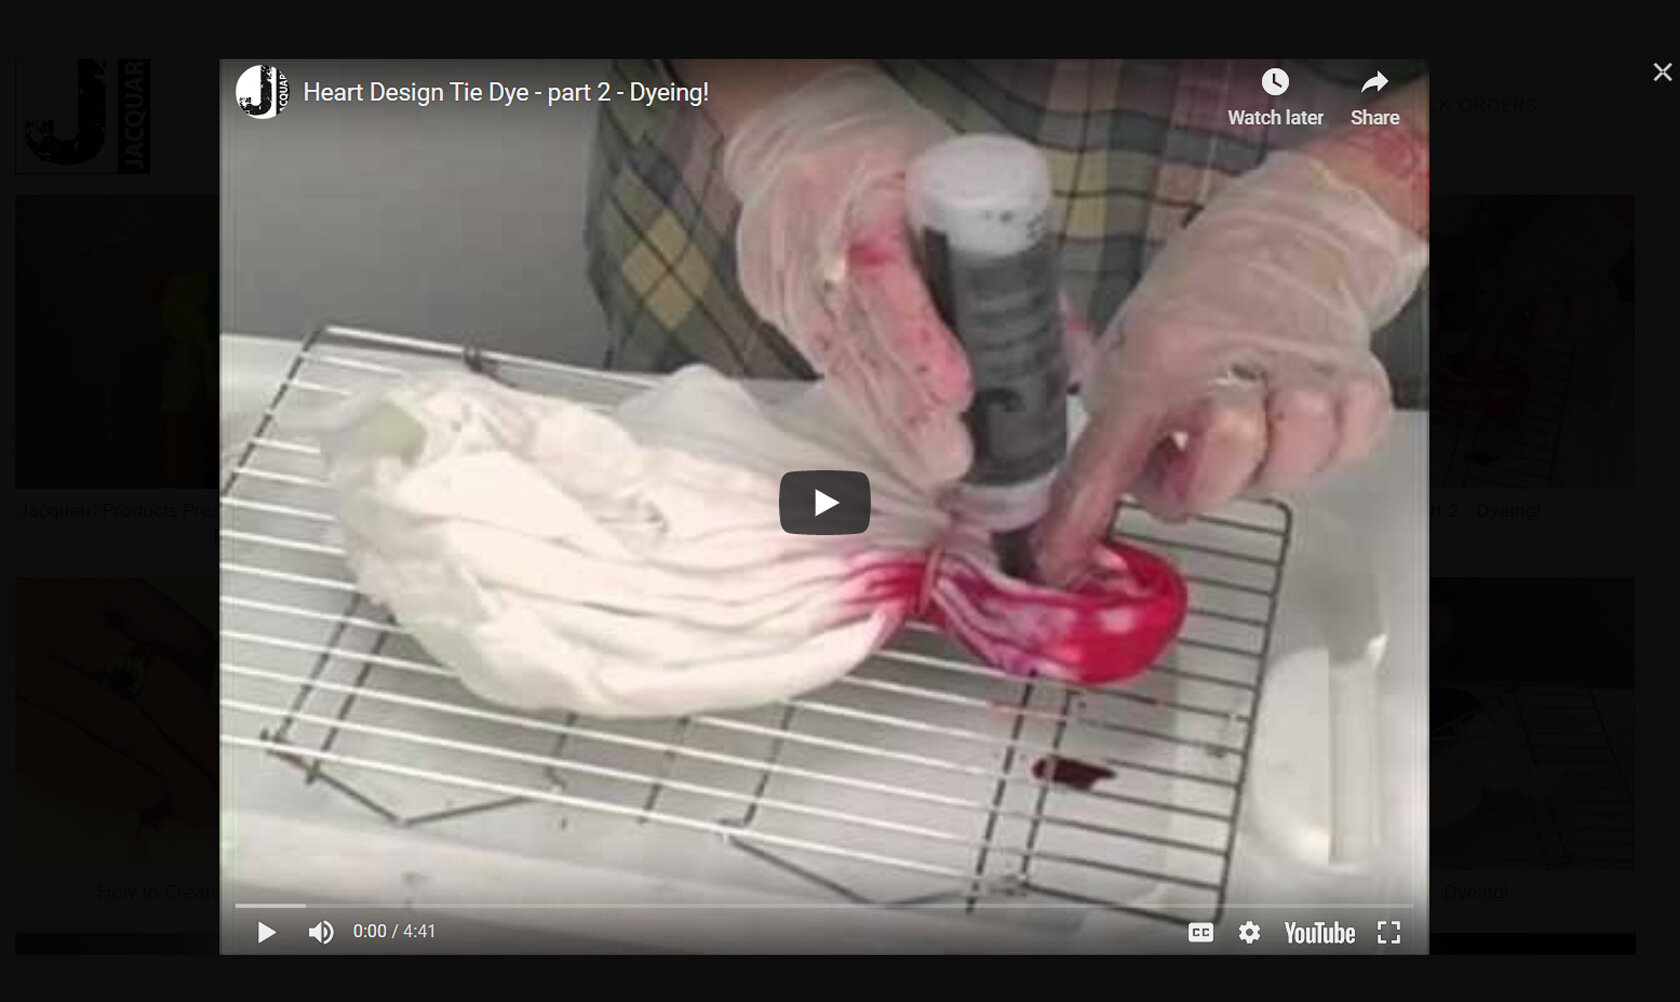 VIDEO: Heart Design Tie Dye - Part 2